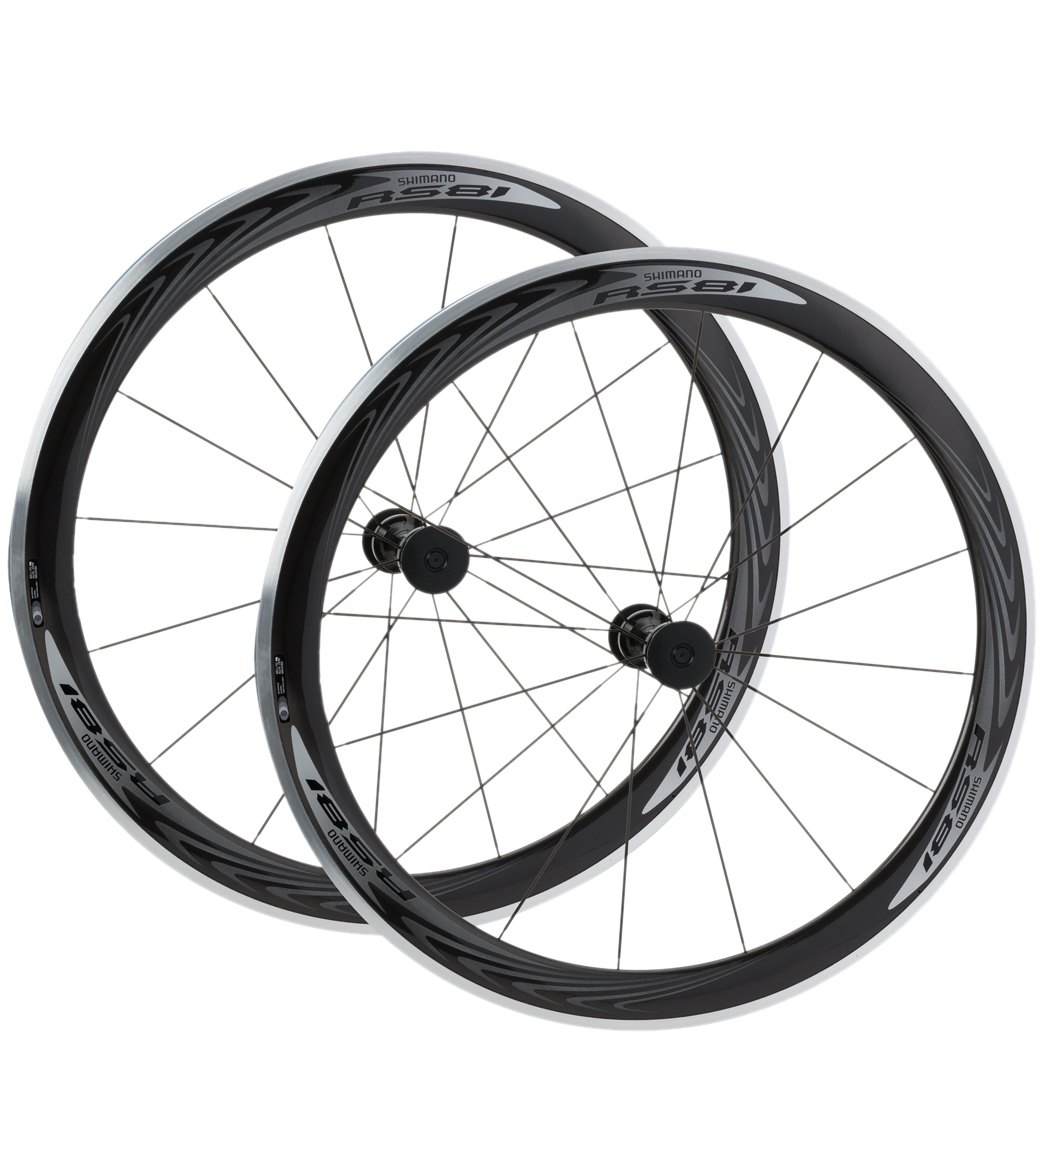 shimano carbon wheelsets